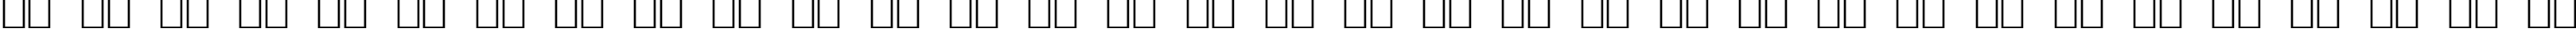 Пример написания русского алфавита шрифтом Peake Bold